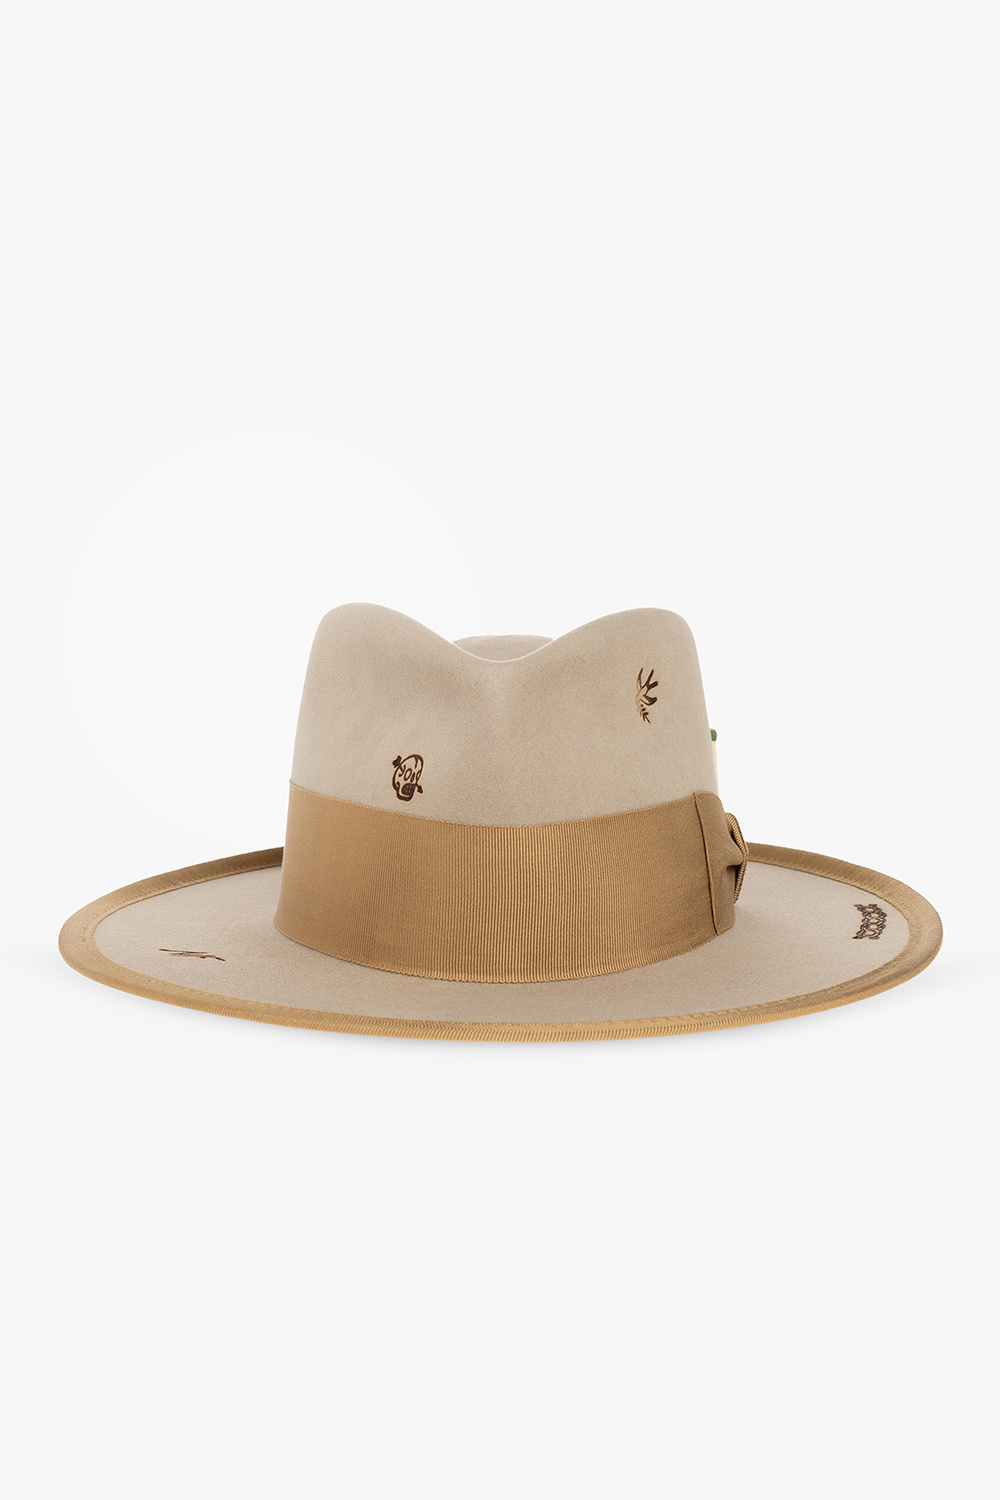 Nick Fouquet ‘Savage Coast’ fedora hat